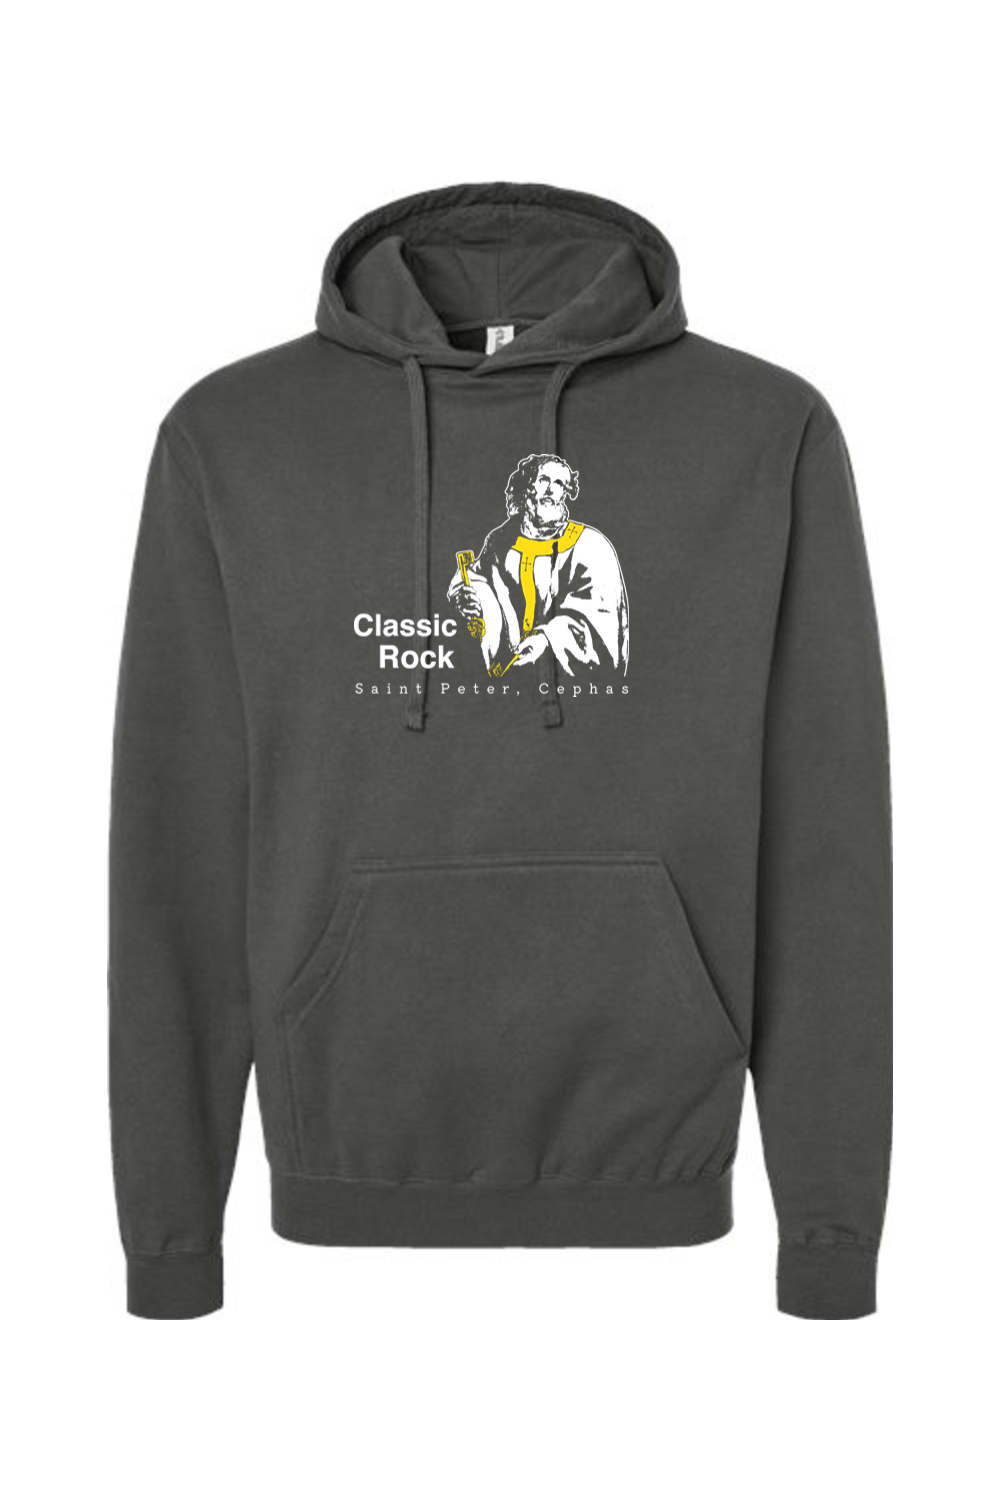 Classic Rock - St. Peter, Cephas Hoodie Sweatshirt